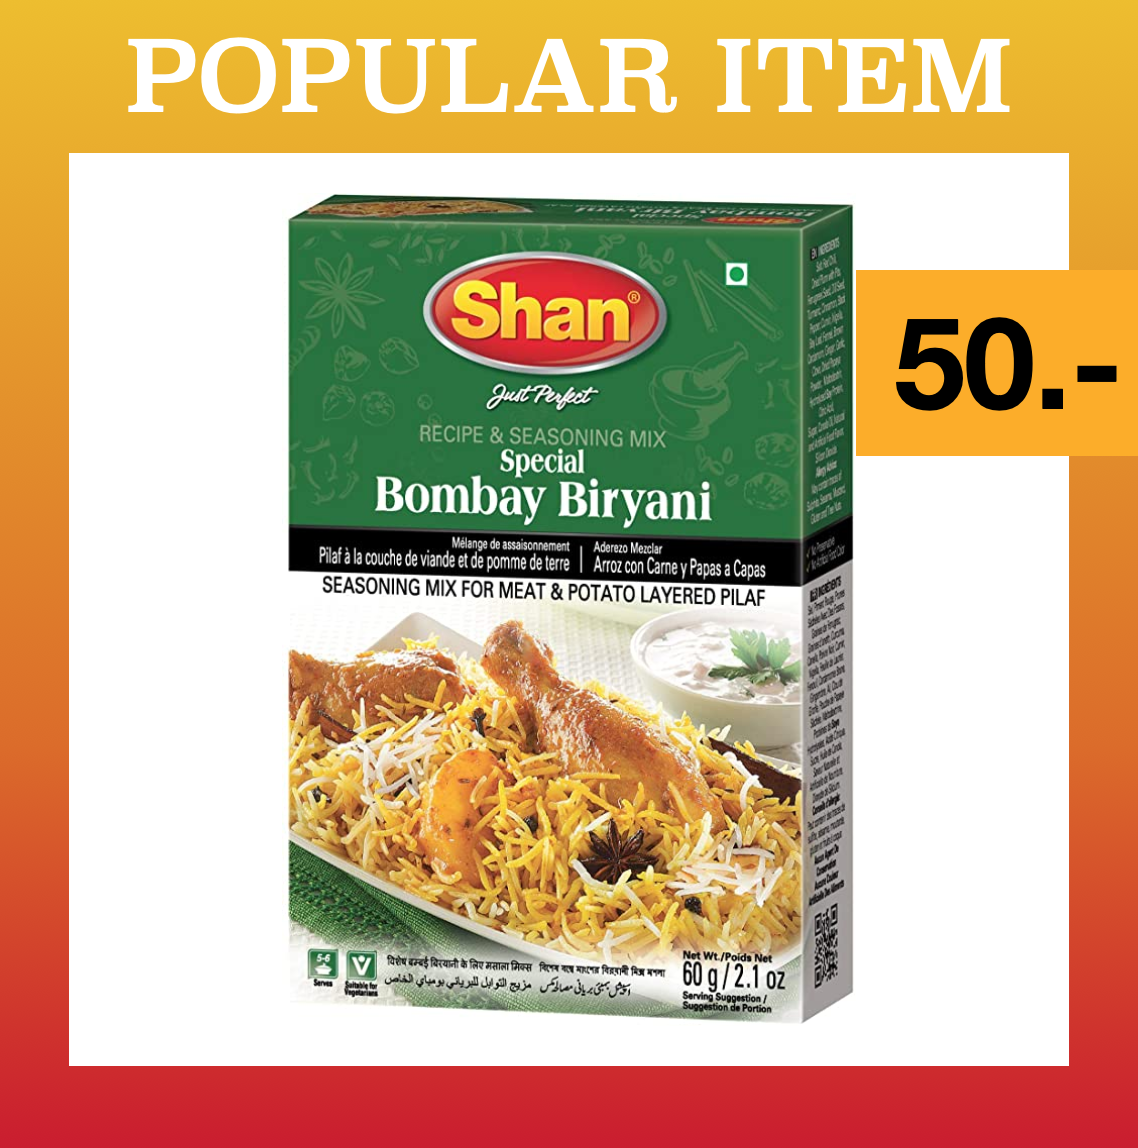 Shan Special Bombay Biryani 60g ++ ชาน สเปเชียล เครื่องเทศข้าวหมกบิรยานี ขนาด 60g